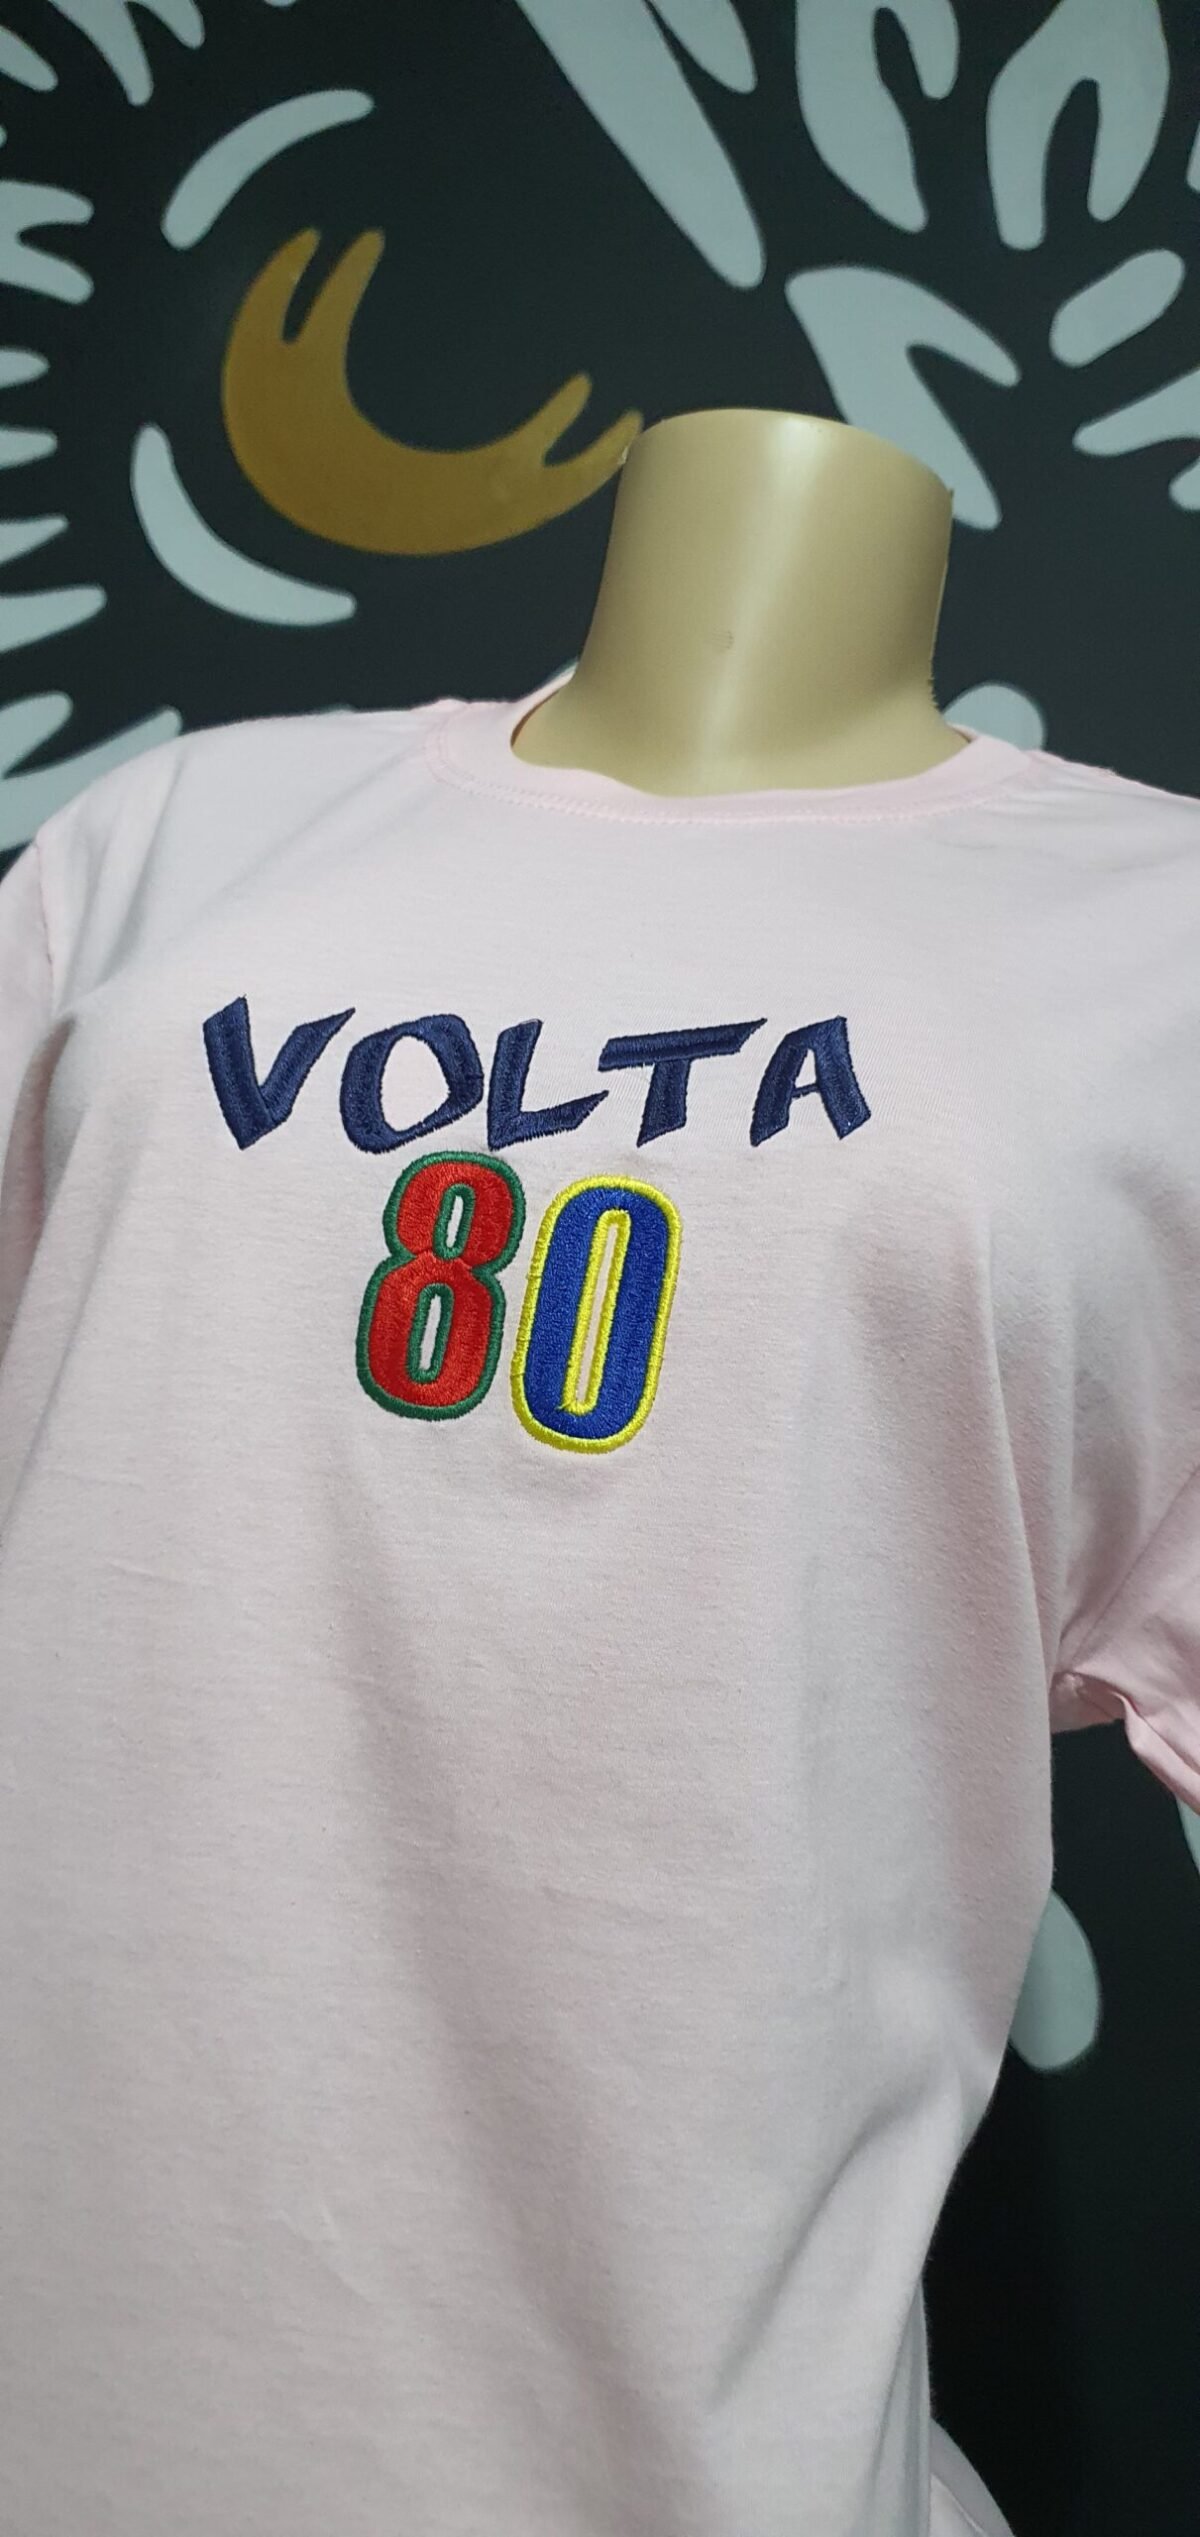 Camiseta bordada feminina - Volta 80 - Logotipo Volta 80 - by Bordado & Cia - @bordado.cia @volta80